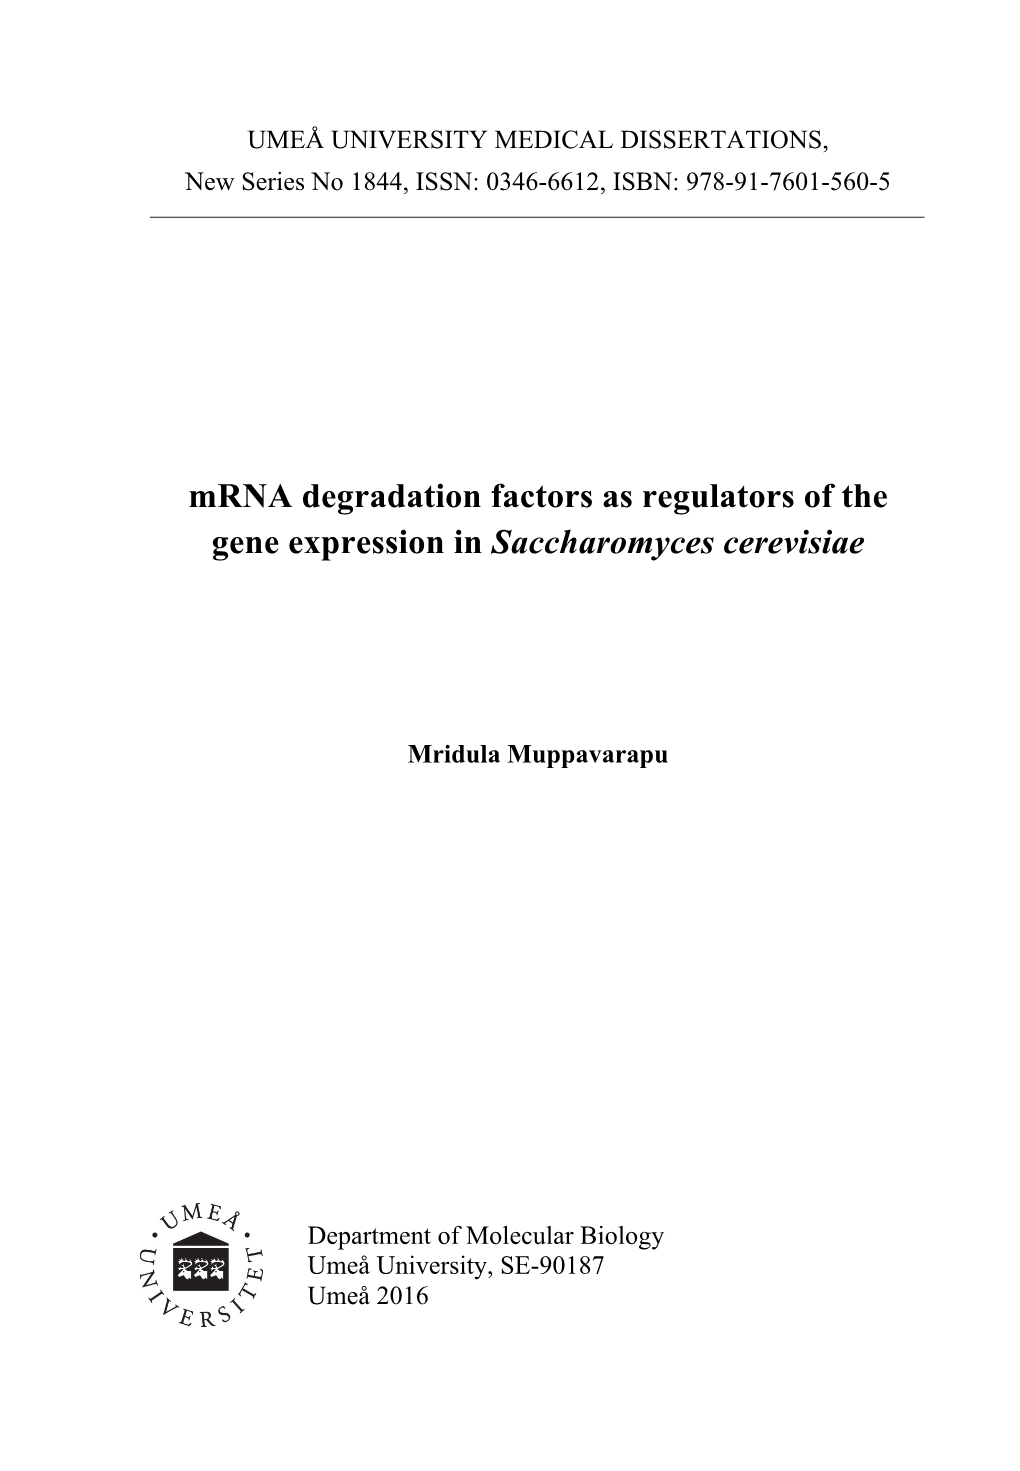 Mrna Degradation Factors As Regulators of the Gene Expression in Saccharomyces Cerevisiae